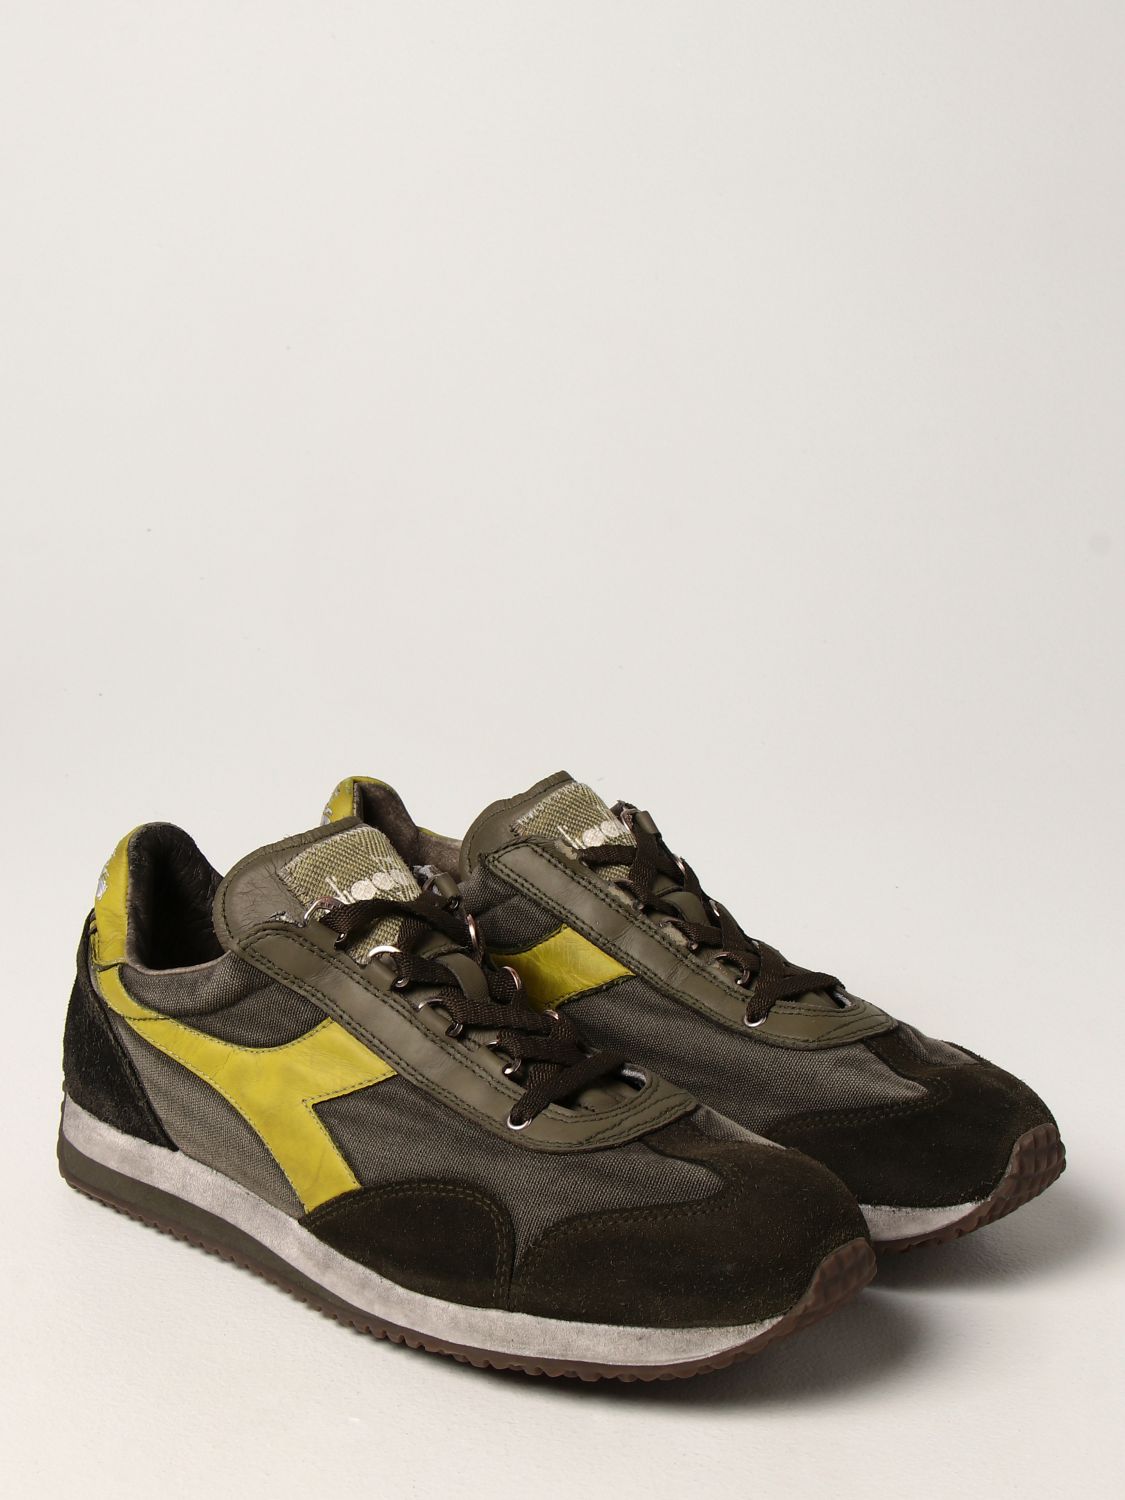 DIADORA HERITAGE: Equipe sneakers in nubuck - Olive | Diadora Heritage sneakers 201174736 online on